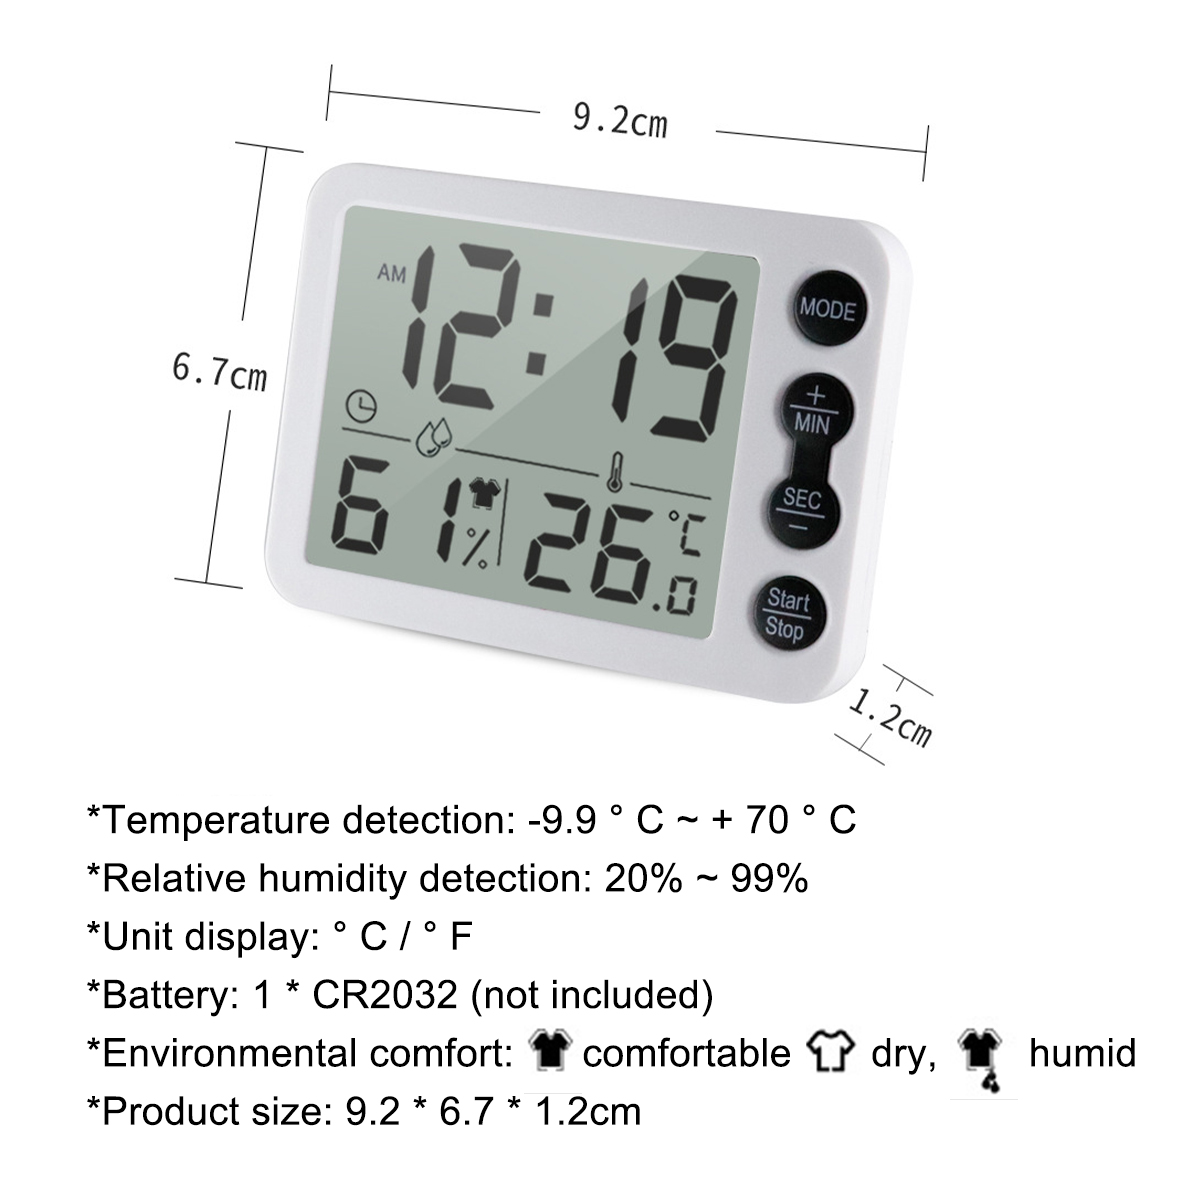 Digital-Home-Thermometer-Hygrometer-Indoor-Outdoor-Temperature-Humidity-Measurem-1631851-10